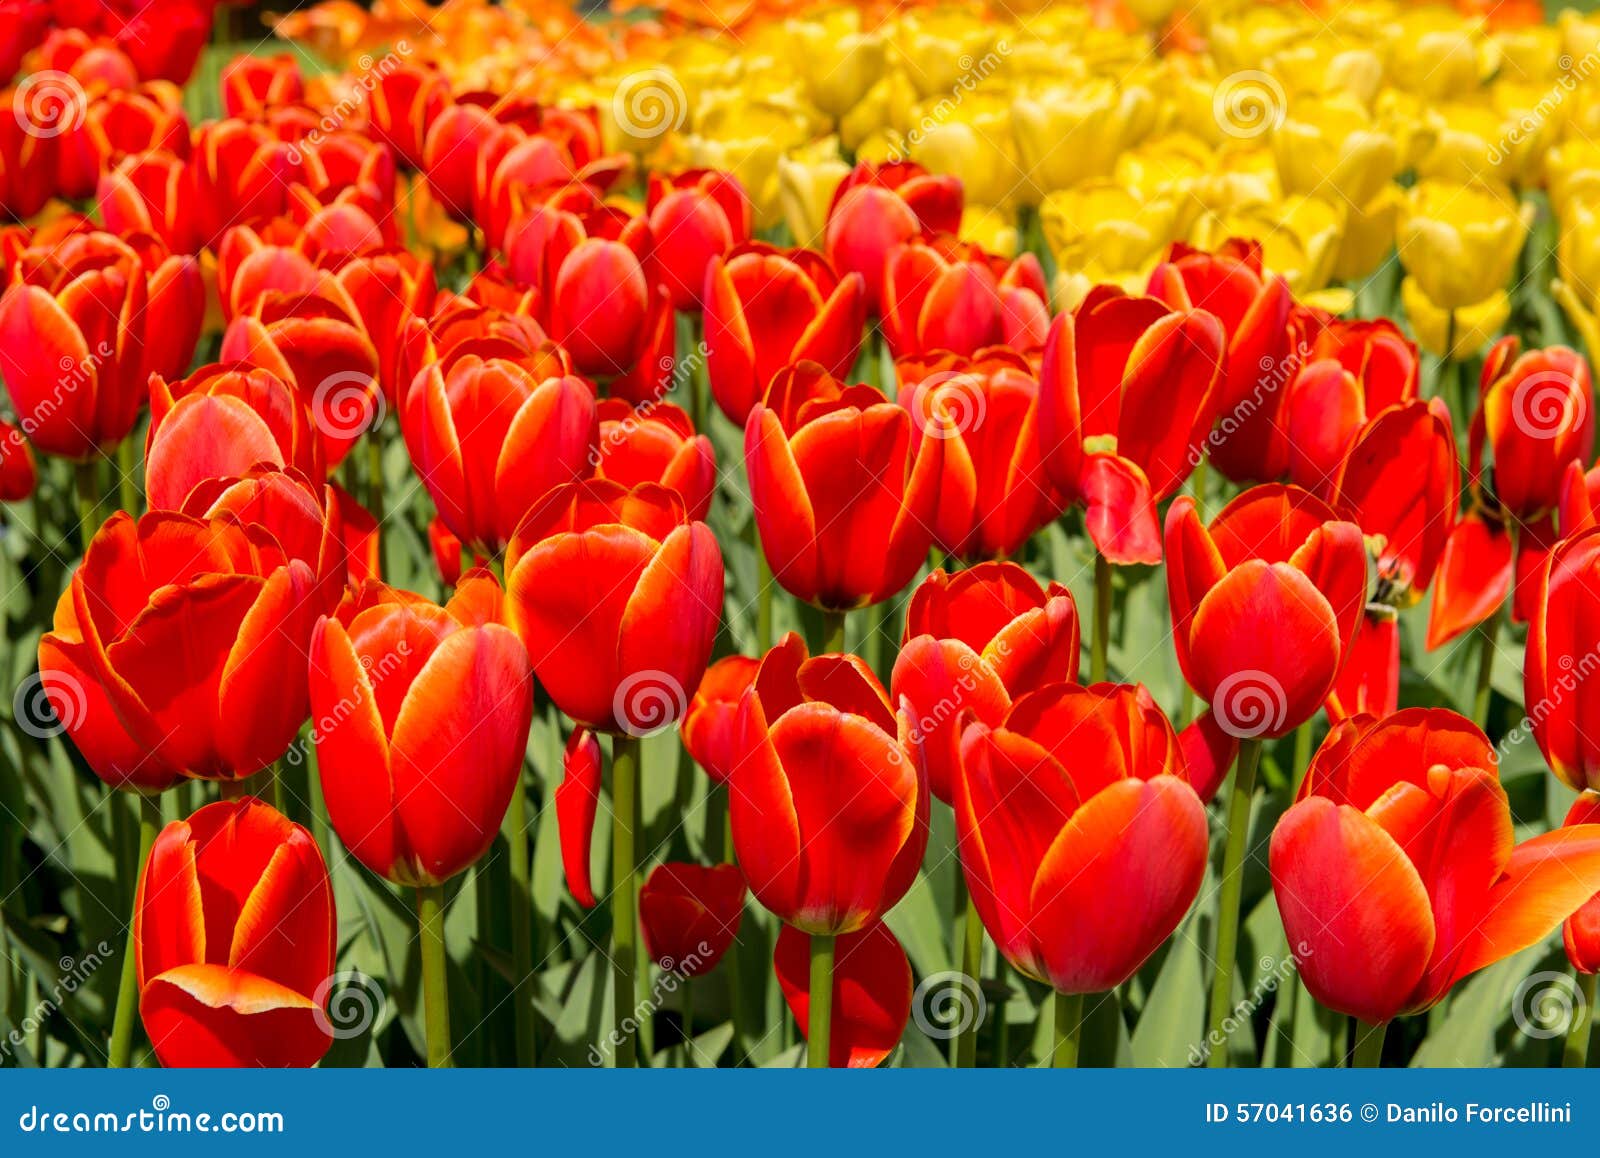 Tulip culture stock photo. Image of floral, farmland - 57041636